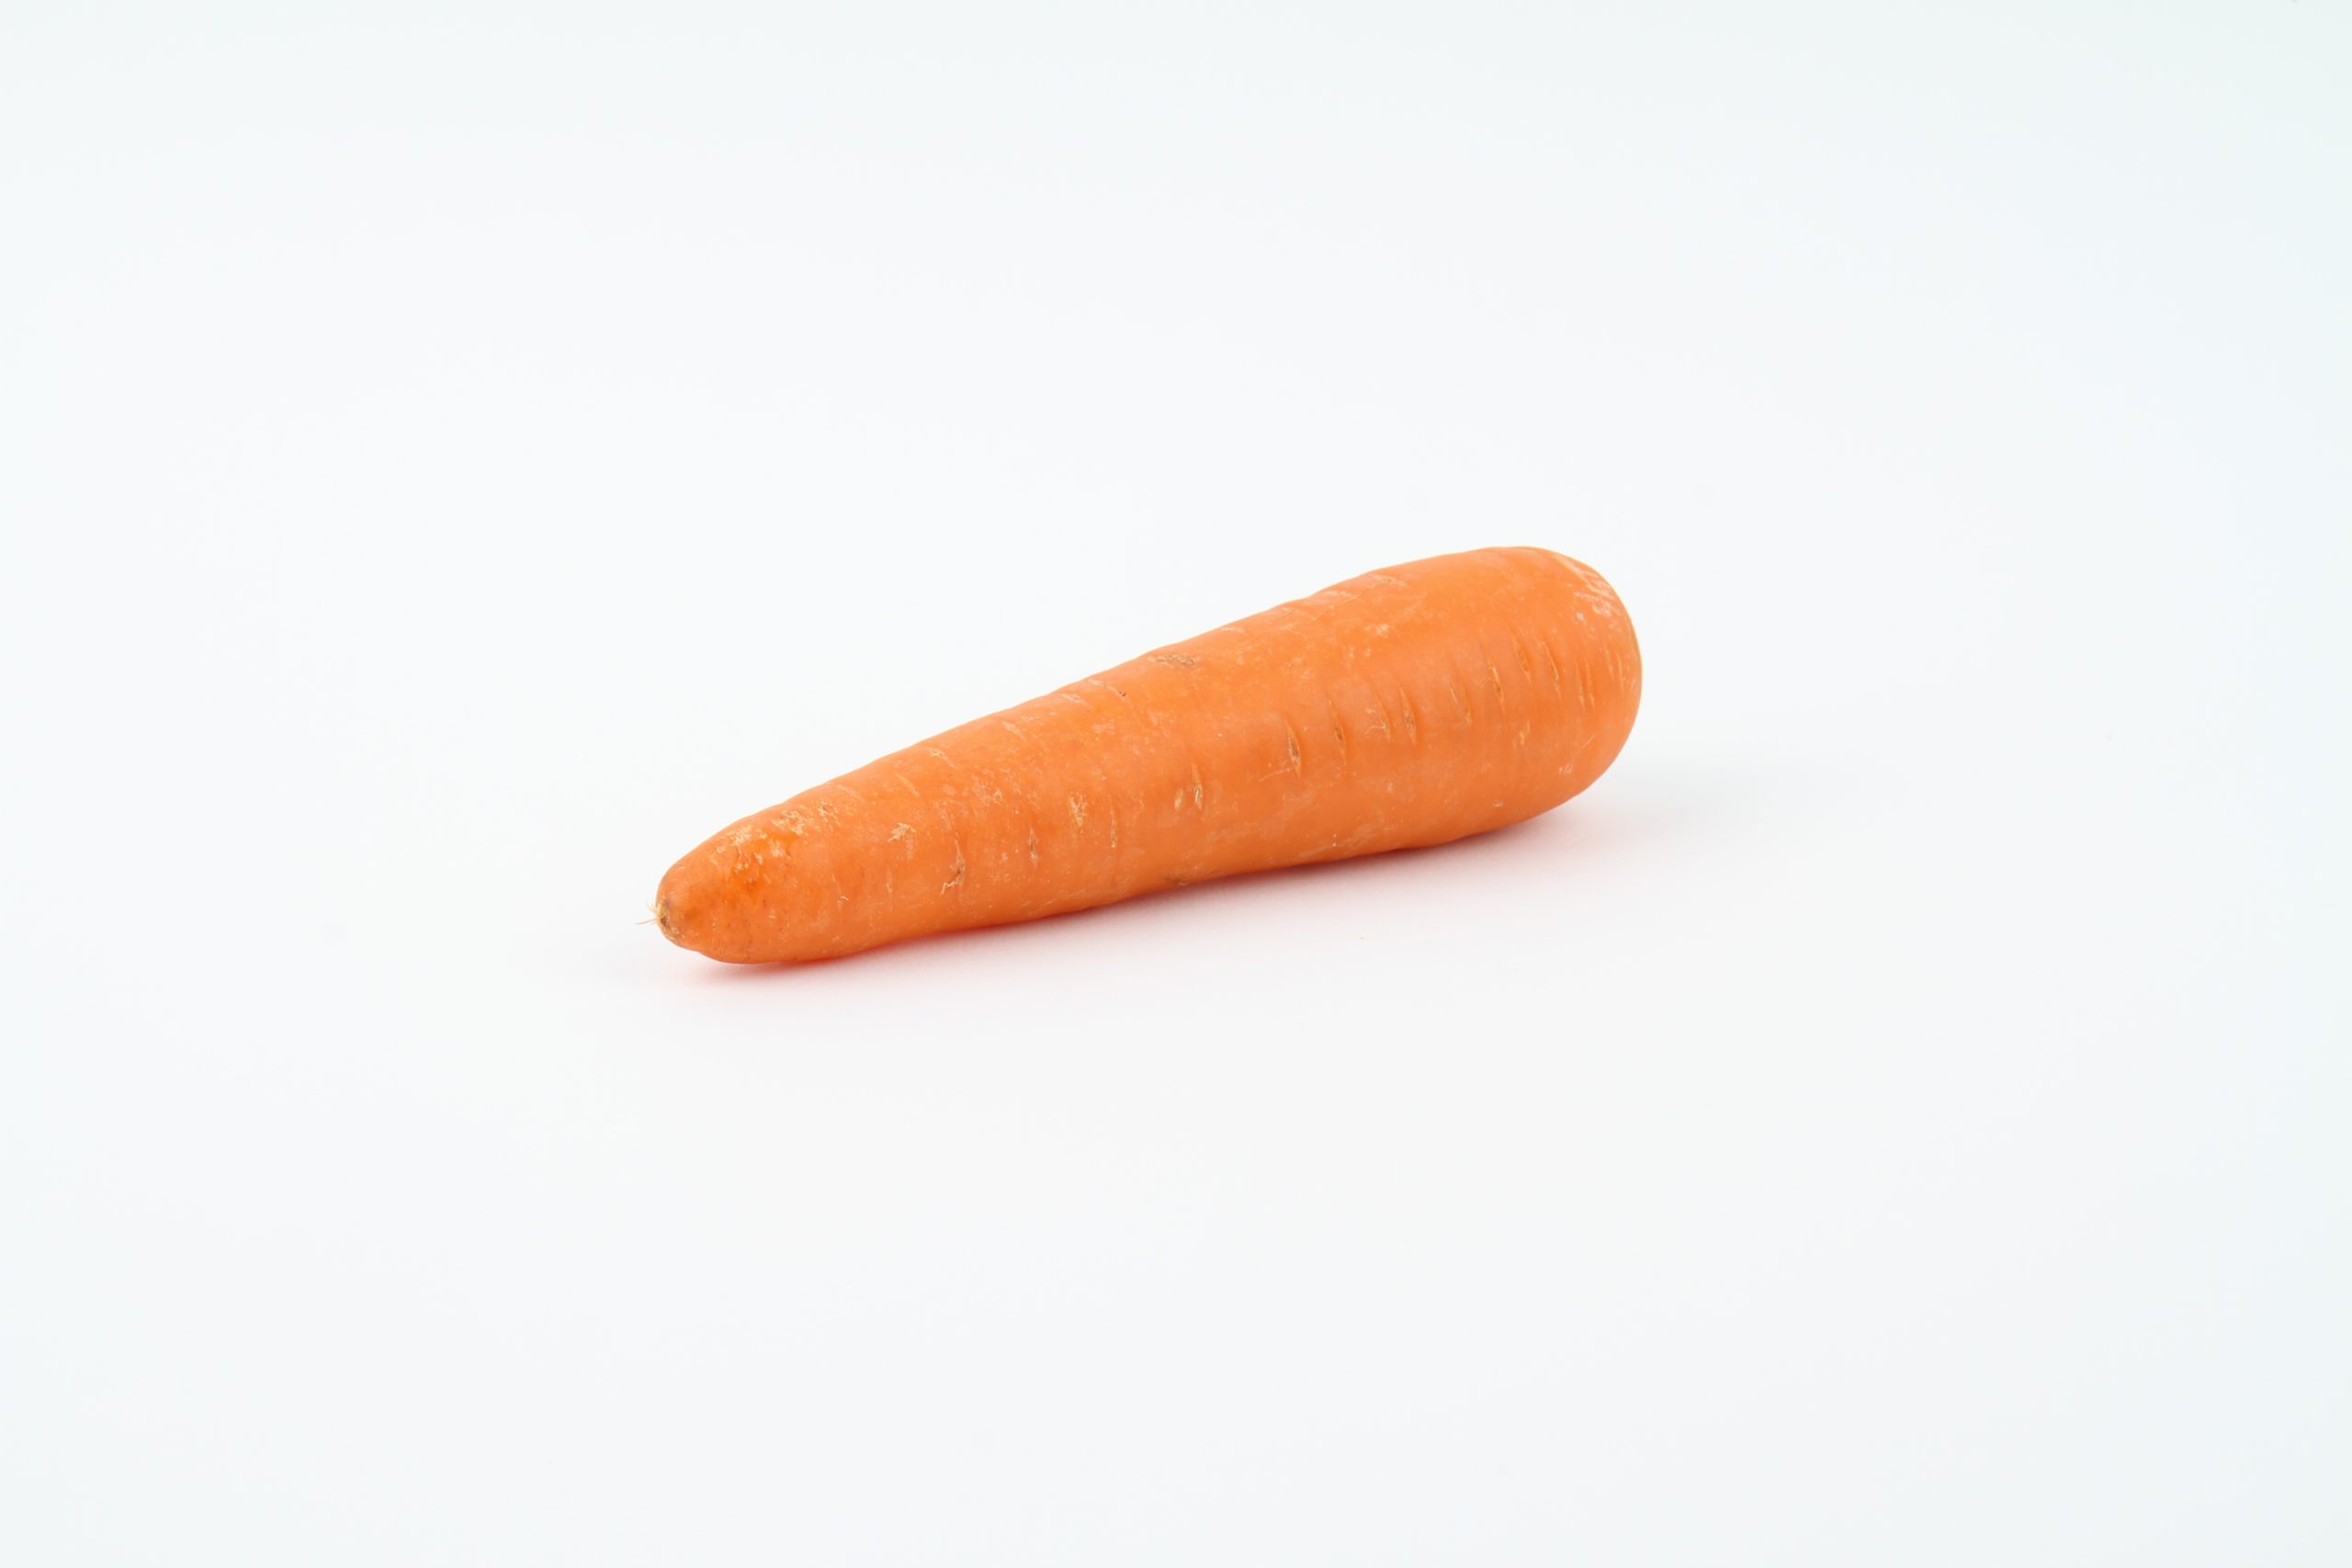 Image source: https://pixabay.com/photos/carrots-vegetables-healthy-155708